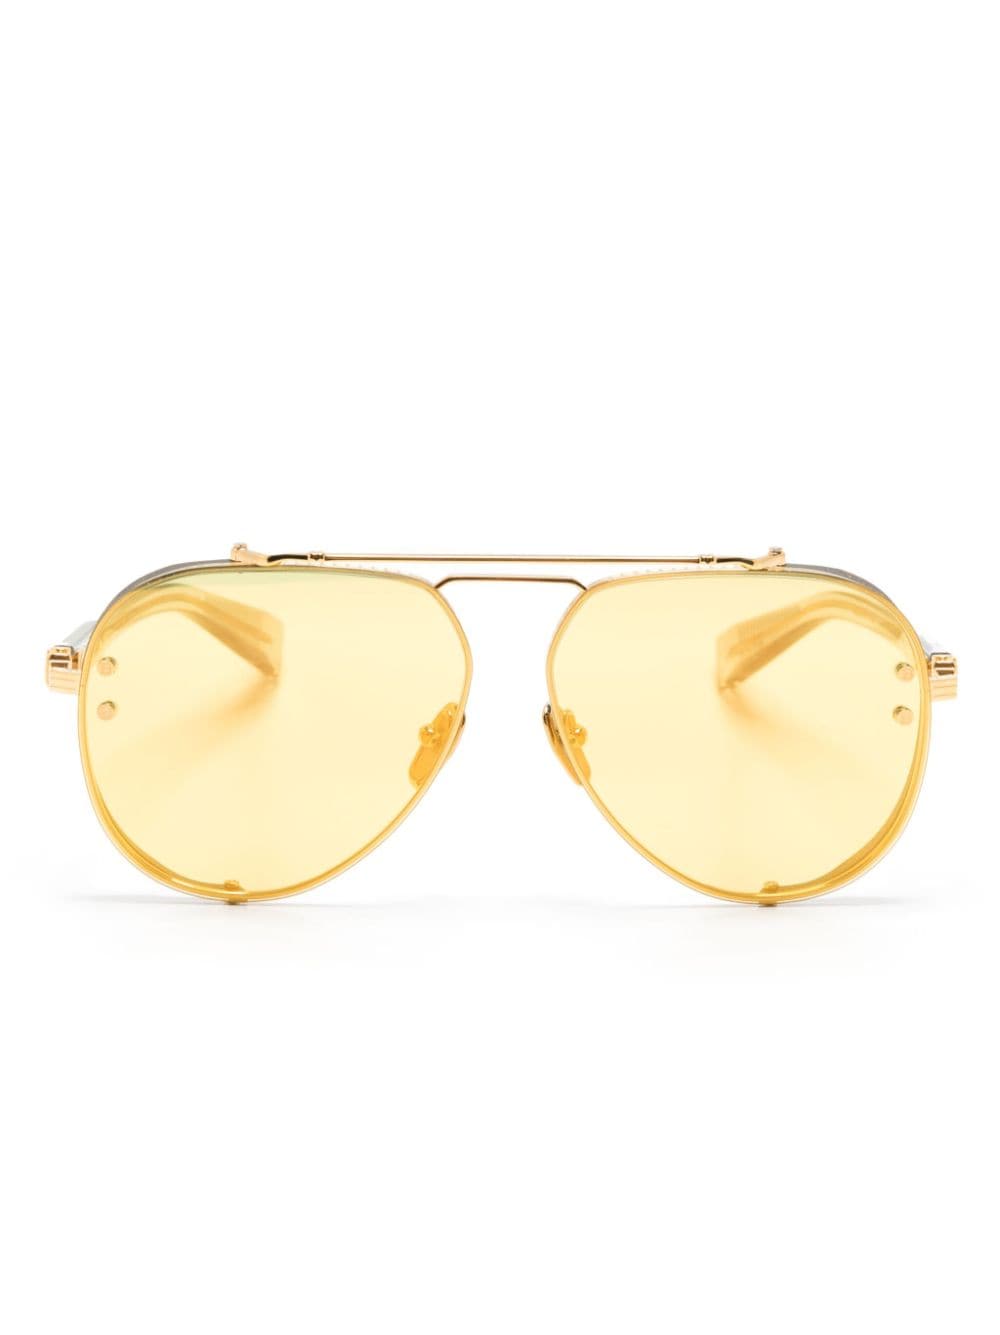 Balmain Eyewear Captaine Pilotenbrille - Gold von Balmain Eyewear